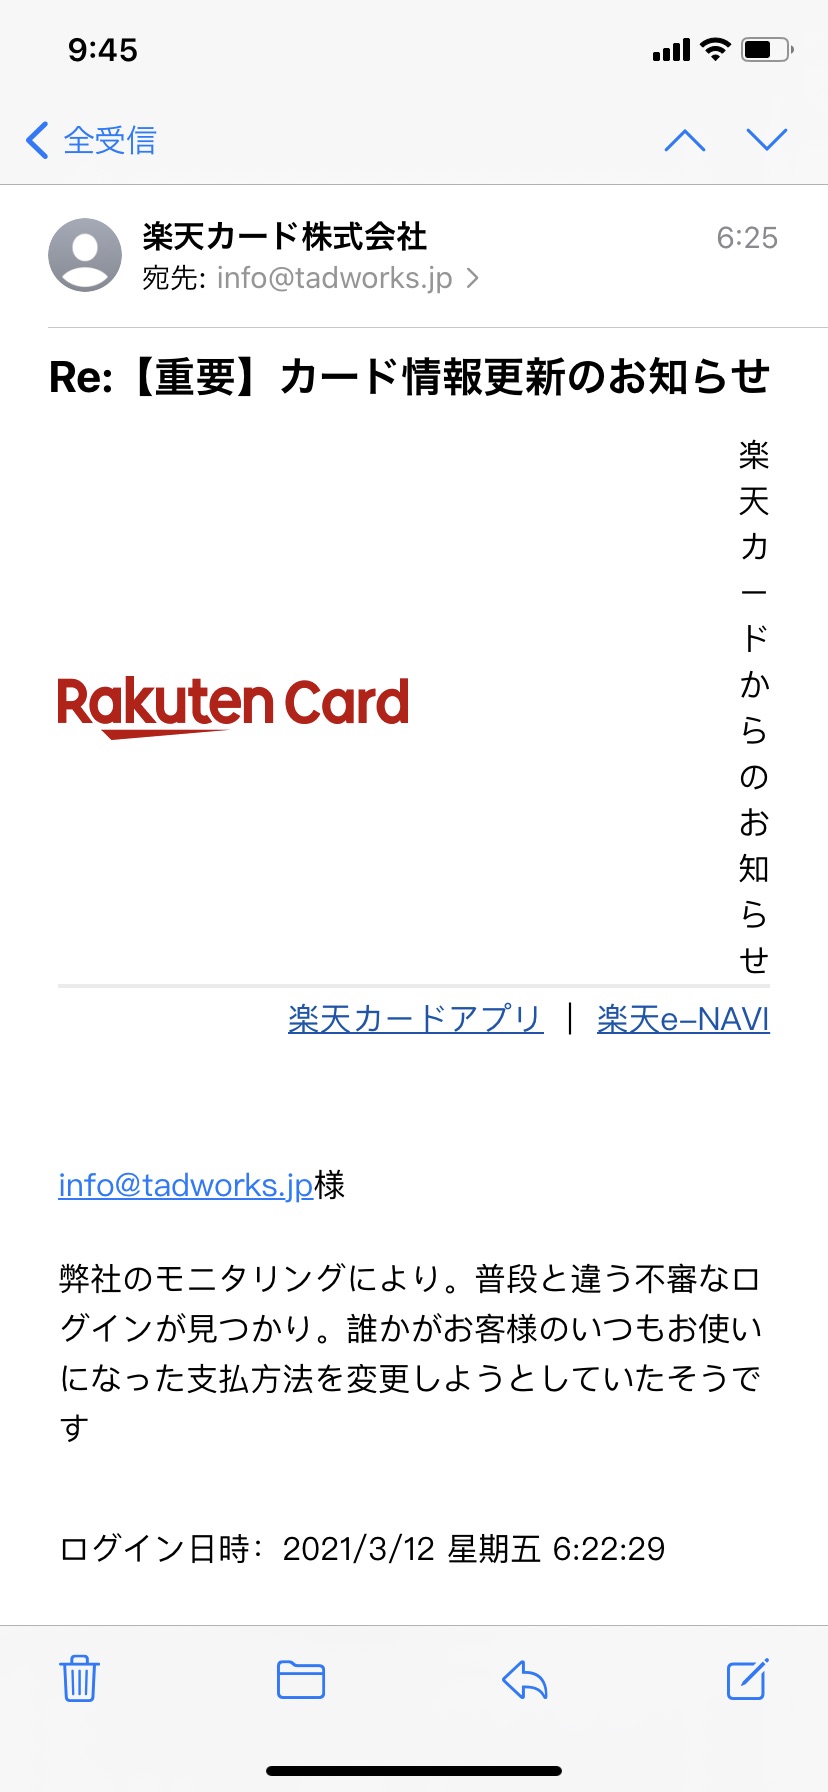 Re:【重要】カード情報更新のお知らせ